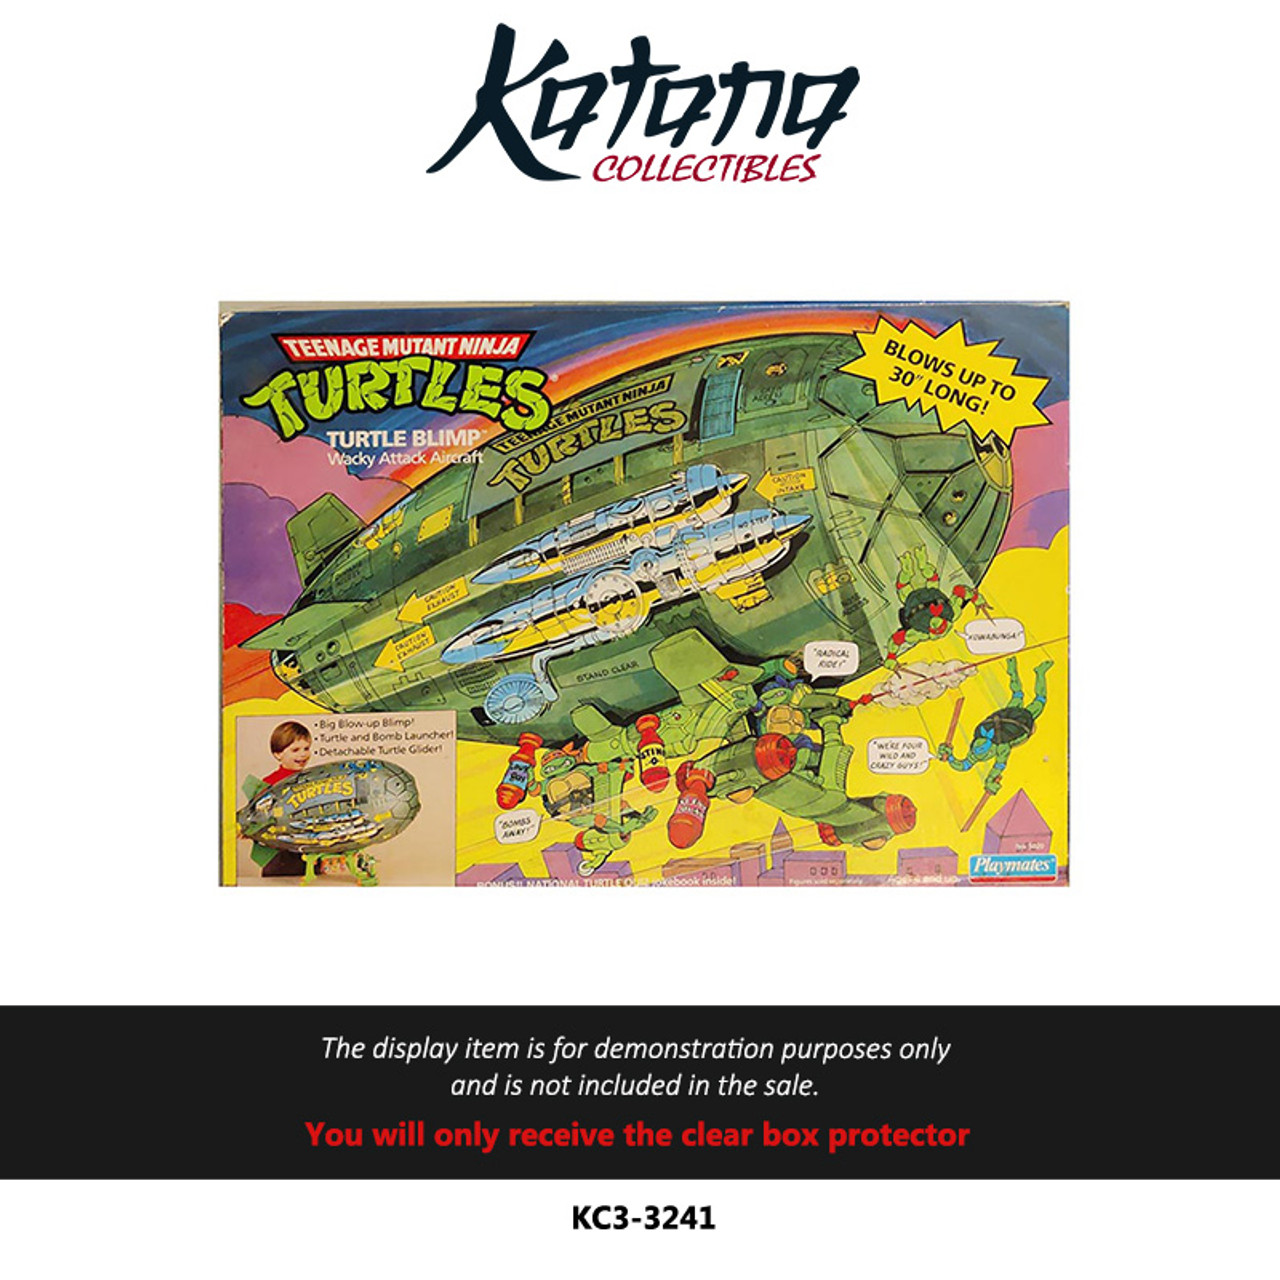 Katana Collectibles Protector For Teenage Mutant Ninja Turtles Turtle Blimp Vehicle